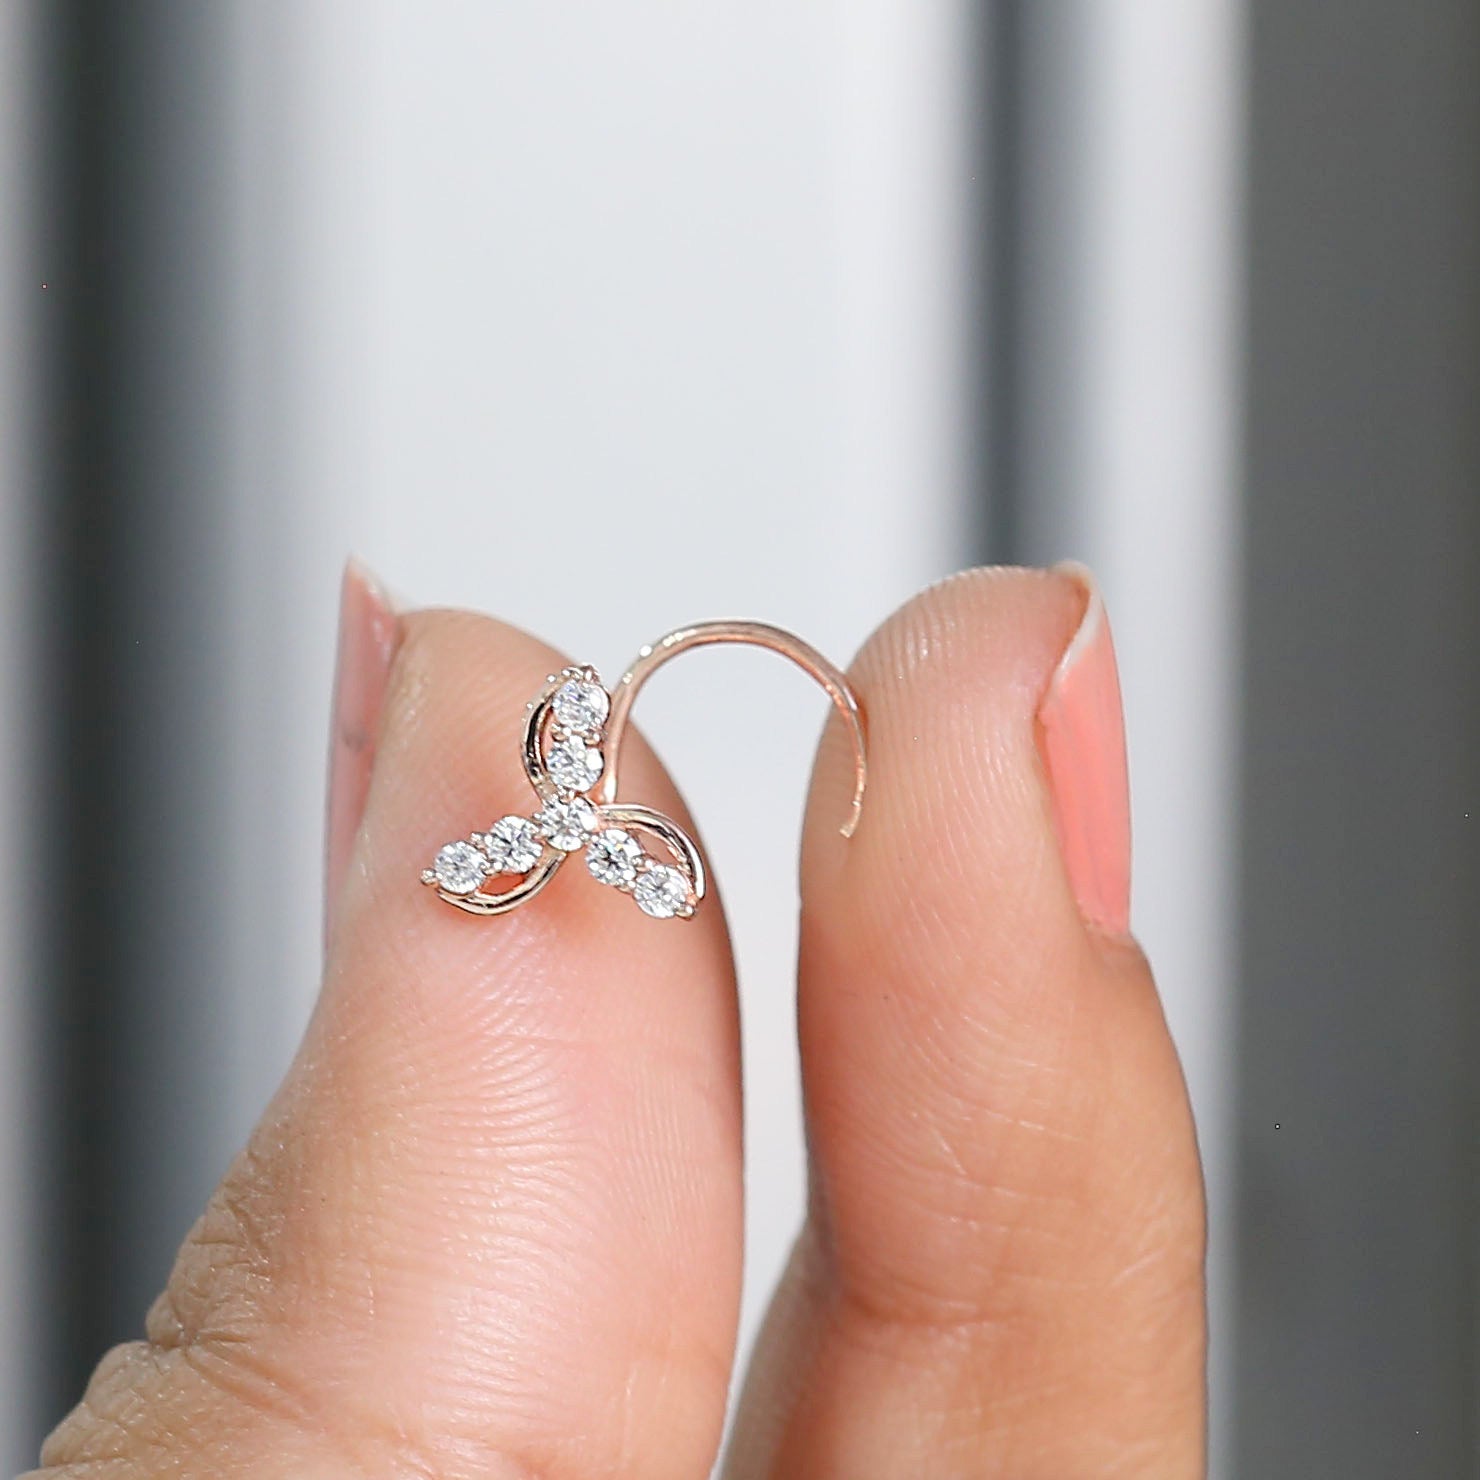 Natural White Round Diamond Nose Rings Engagement Wedding Gift Nose Ring 14K Solid Rose White Yellow Gold Nose Ring 0.11 CT KD1021